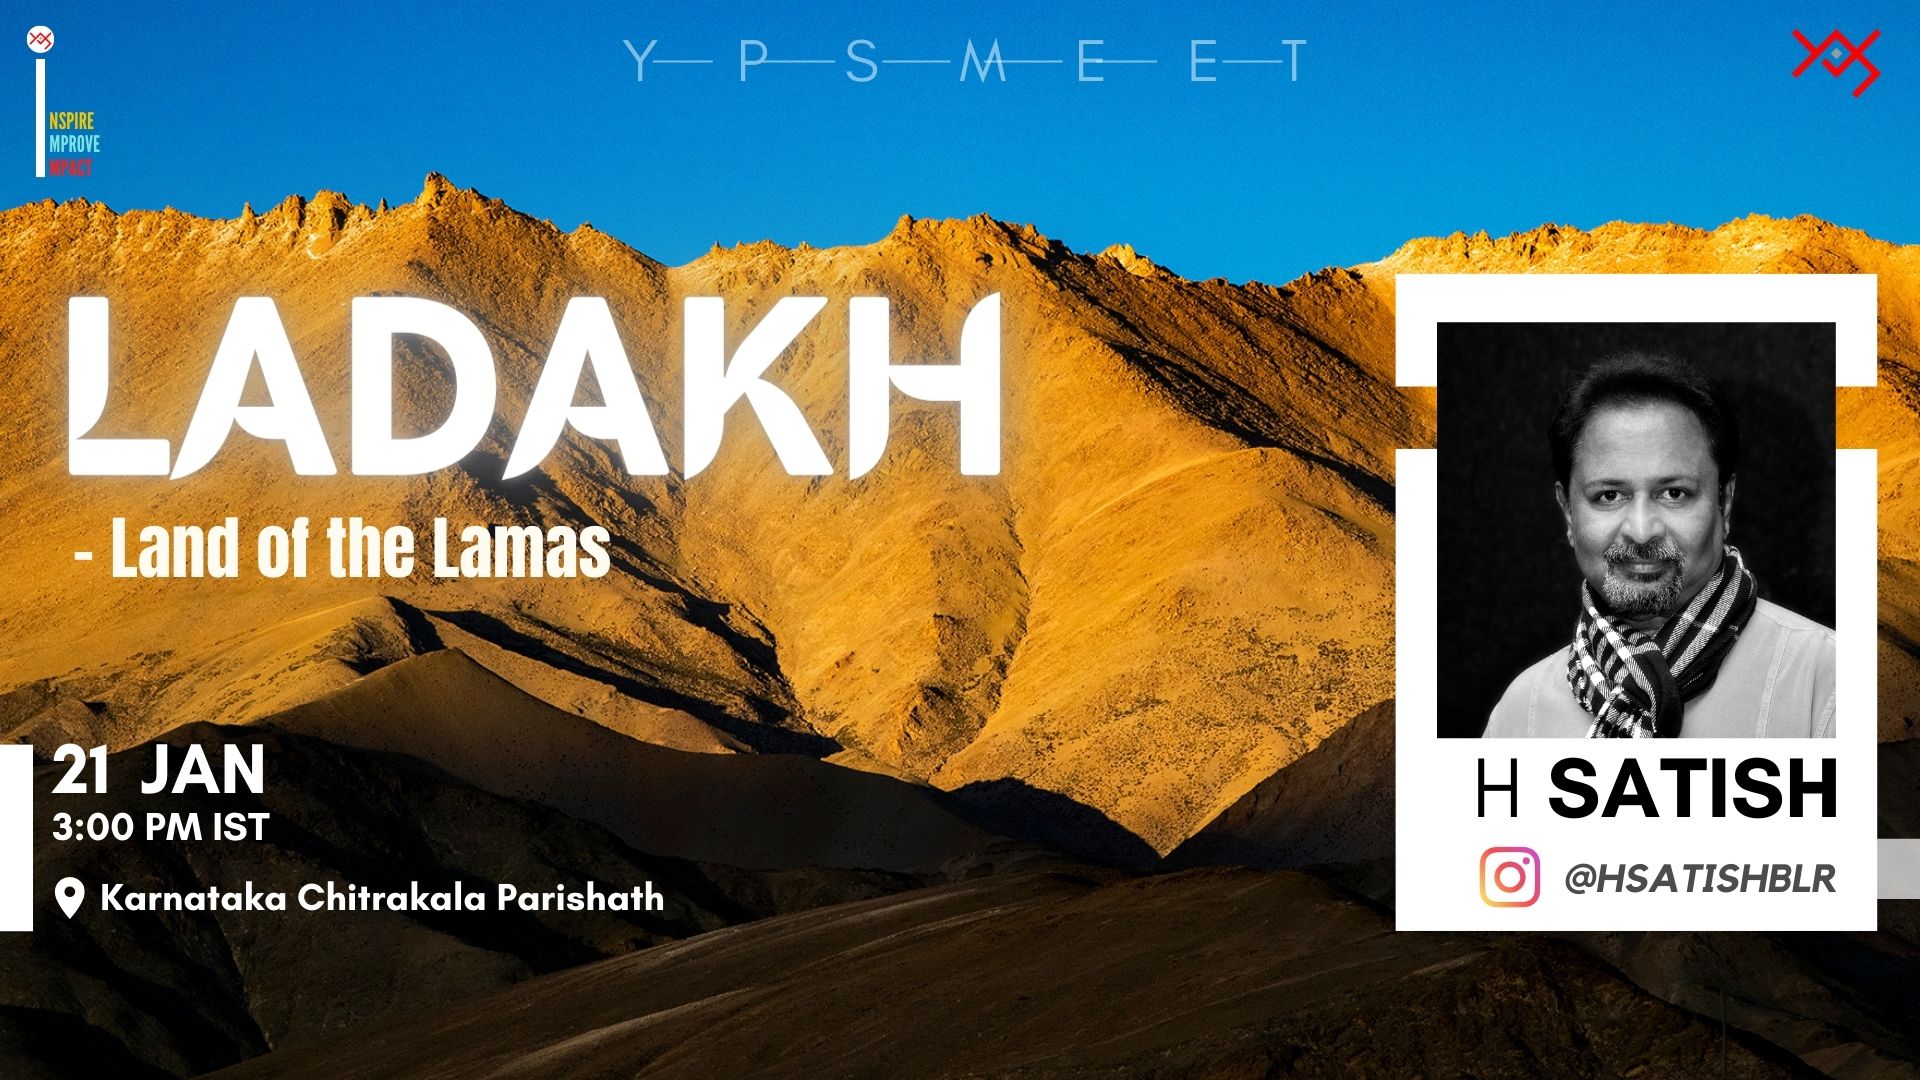 YPS Meet Ladakh Land of Lamas - A Presentation by Mr H Satish on 21 Jan at 3pm IST at CKP